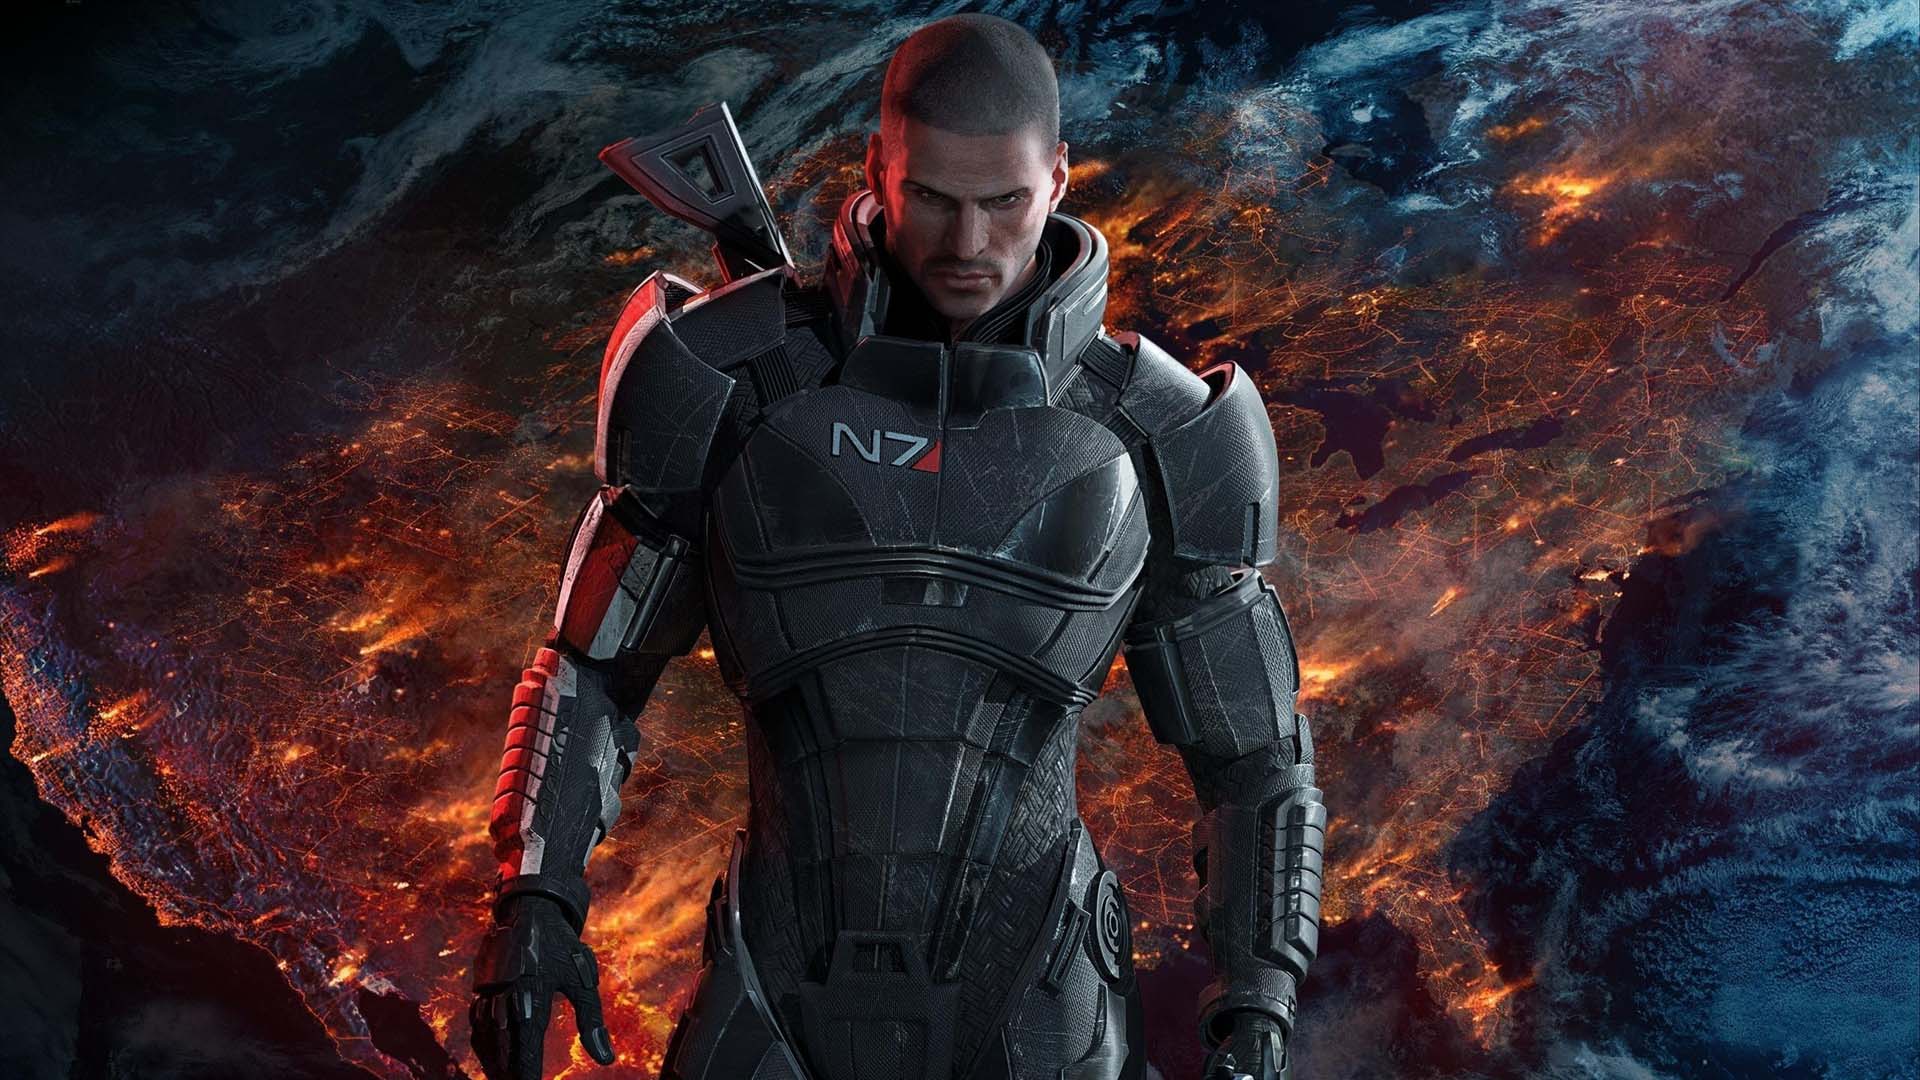 Mass Effect 3 HD Desktop Wallpapers and Photo Gallery